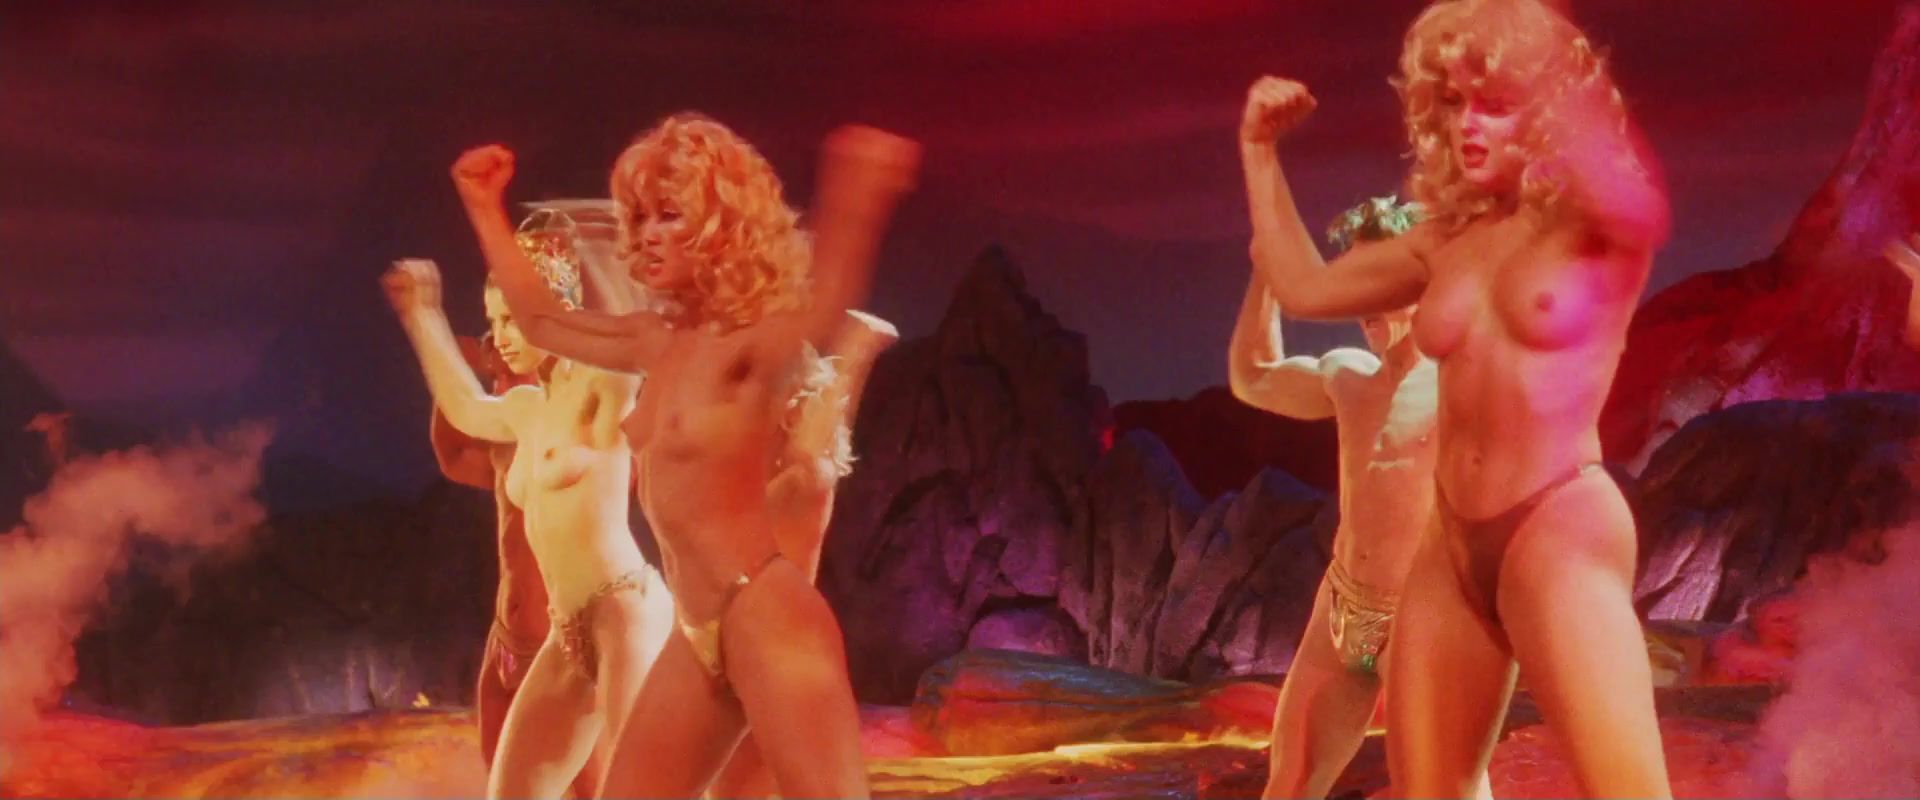 Orgasms Best Striptease Scenes from Movies: Gina Gershon, Elizabeth Berkley - Showgirls (1995) Tory Lane - 1